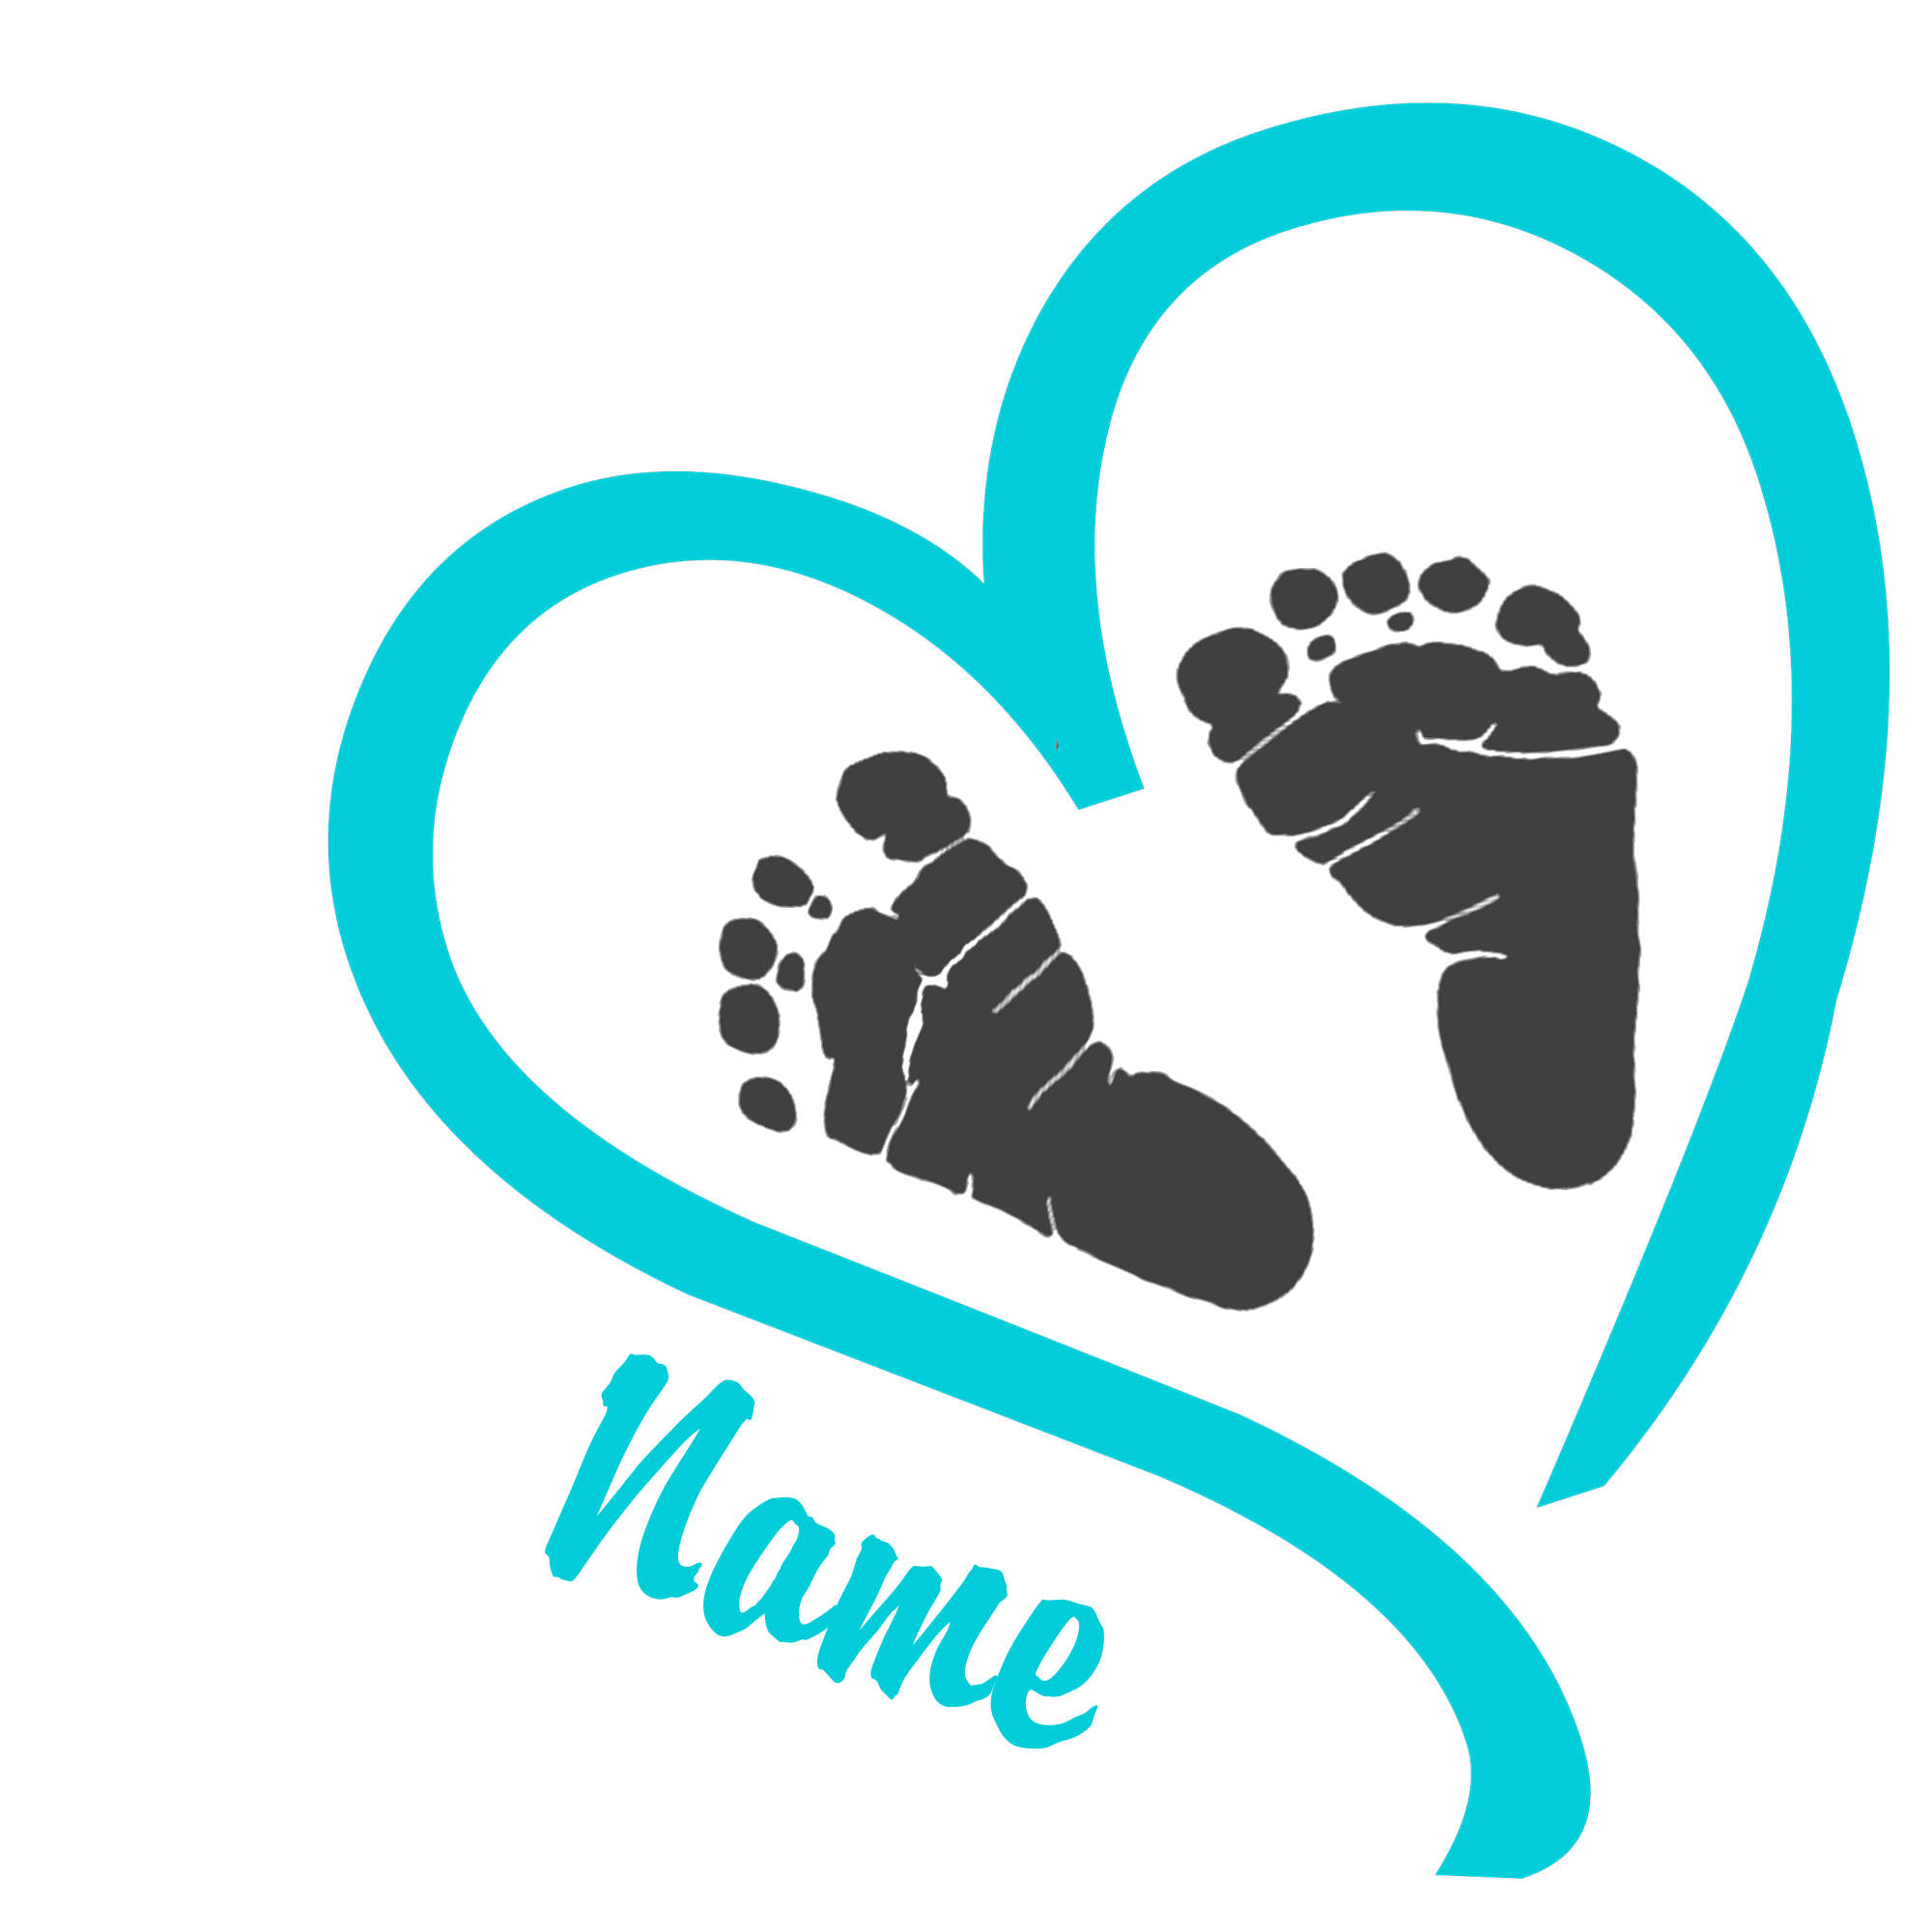 Footprint Infant Heart Clip art - Heart Feet Cliparts png download ...